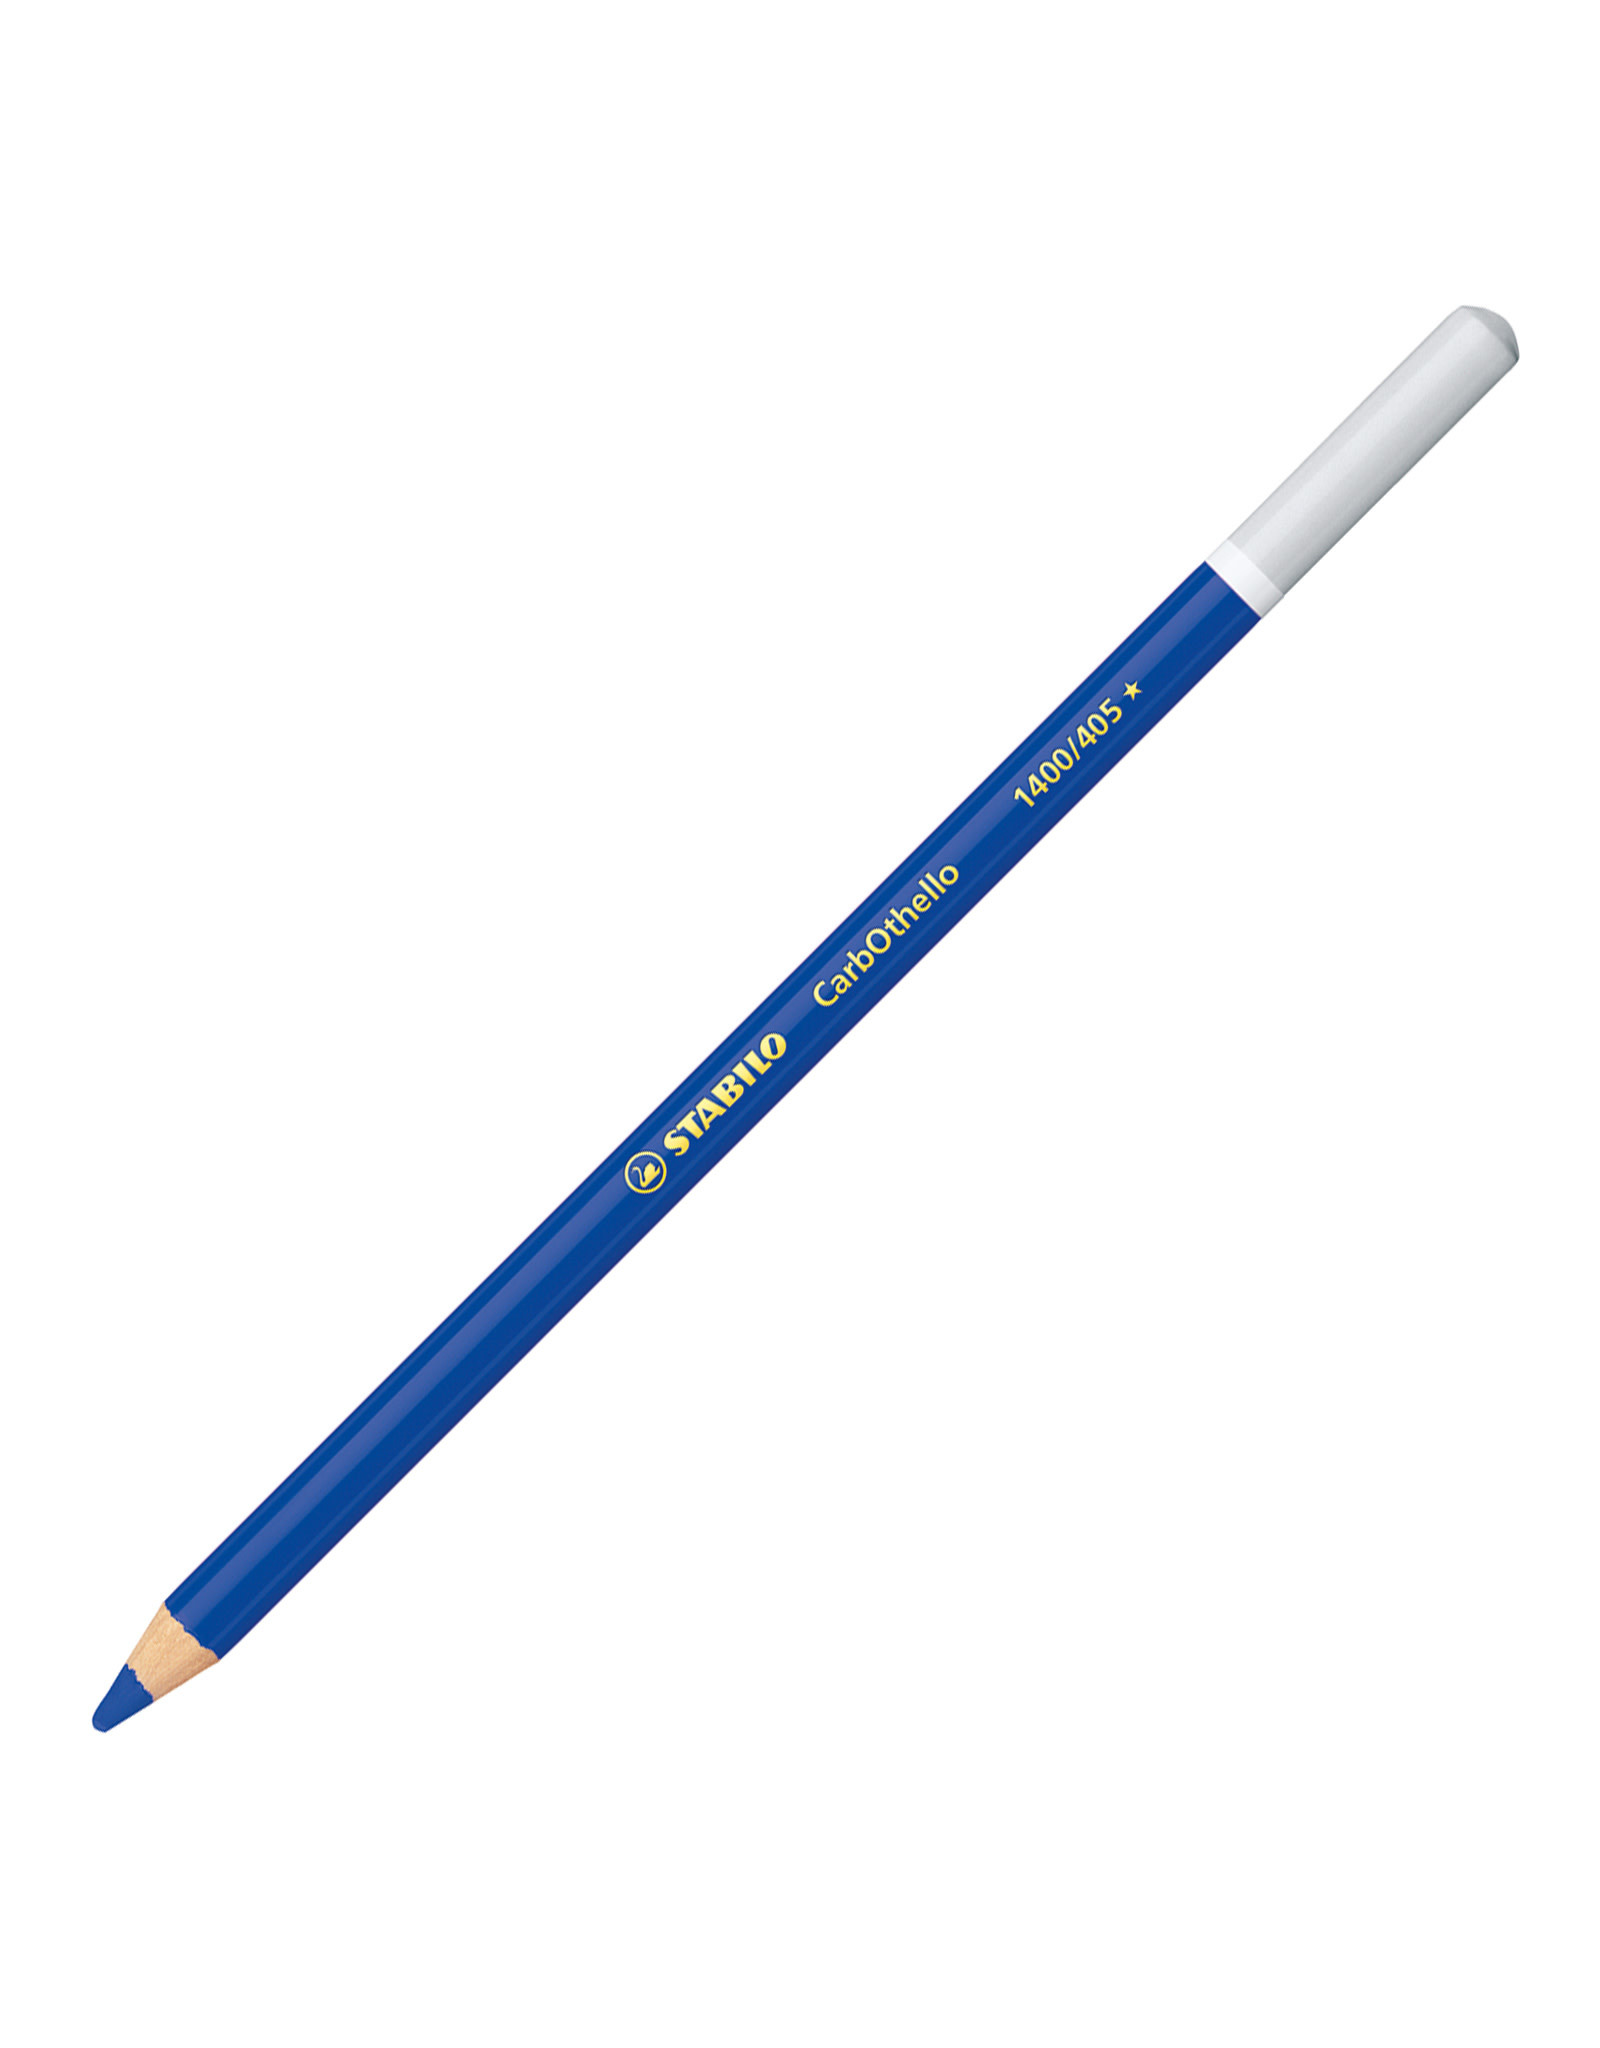 STABILO Stabilo Carbothello Pastel Pencil, Ultramarine Blue